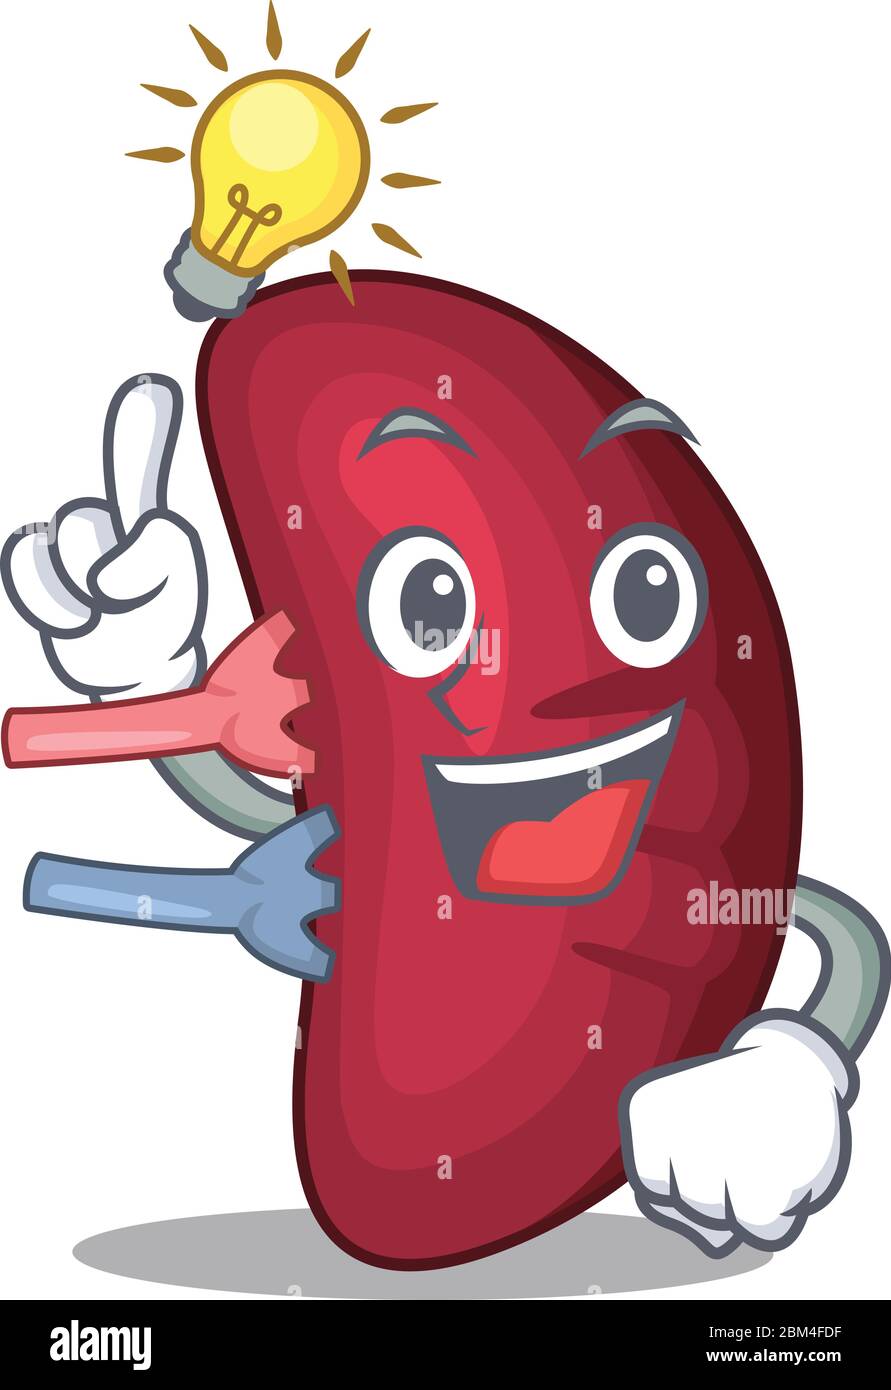 Mascot character design of human spleen with has an idea smart gesture Stock Vector